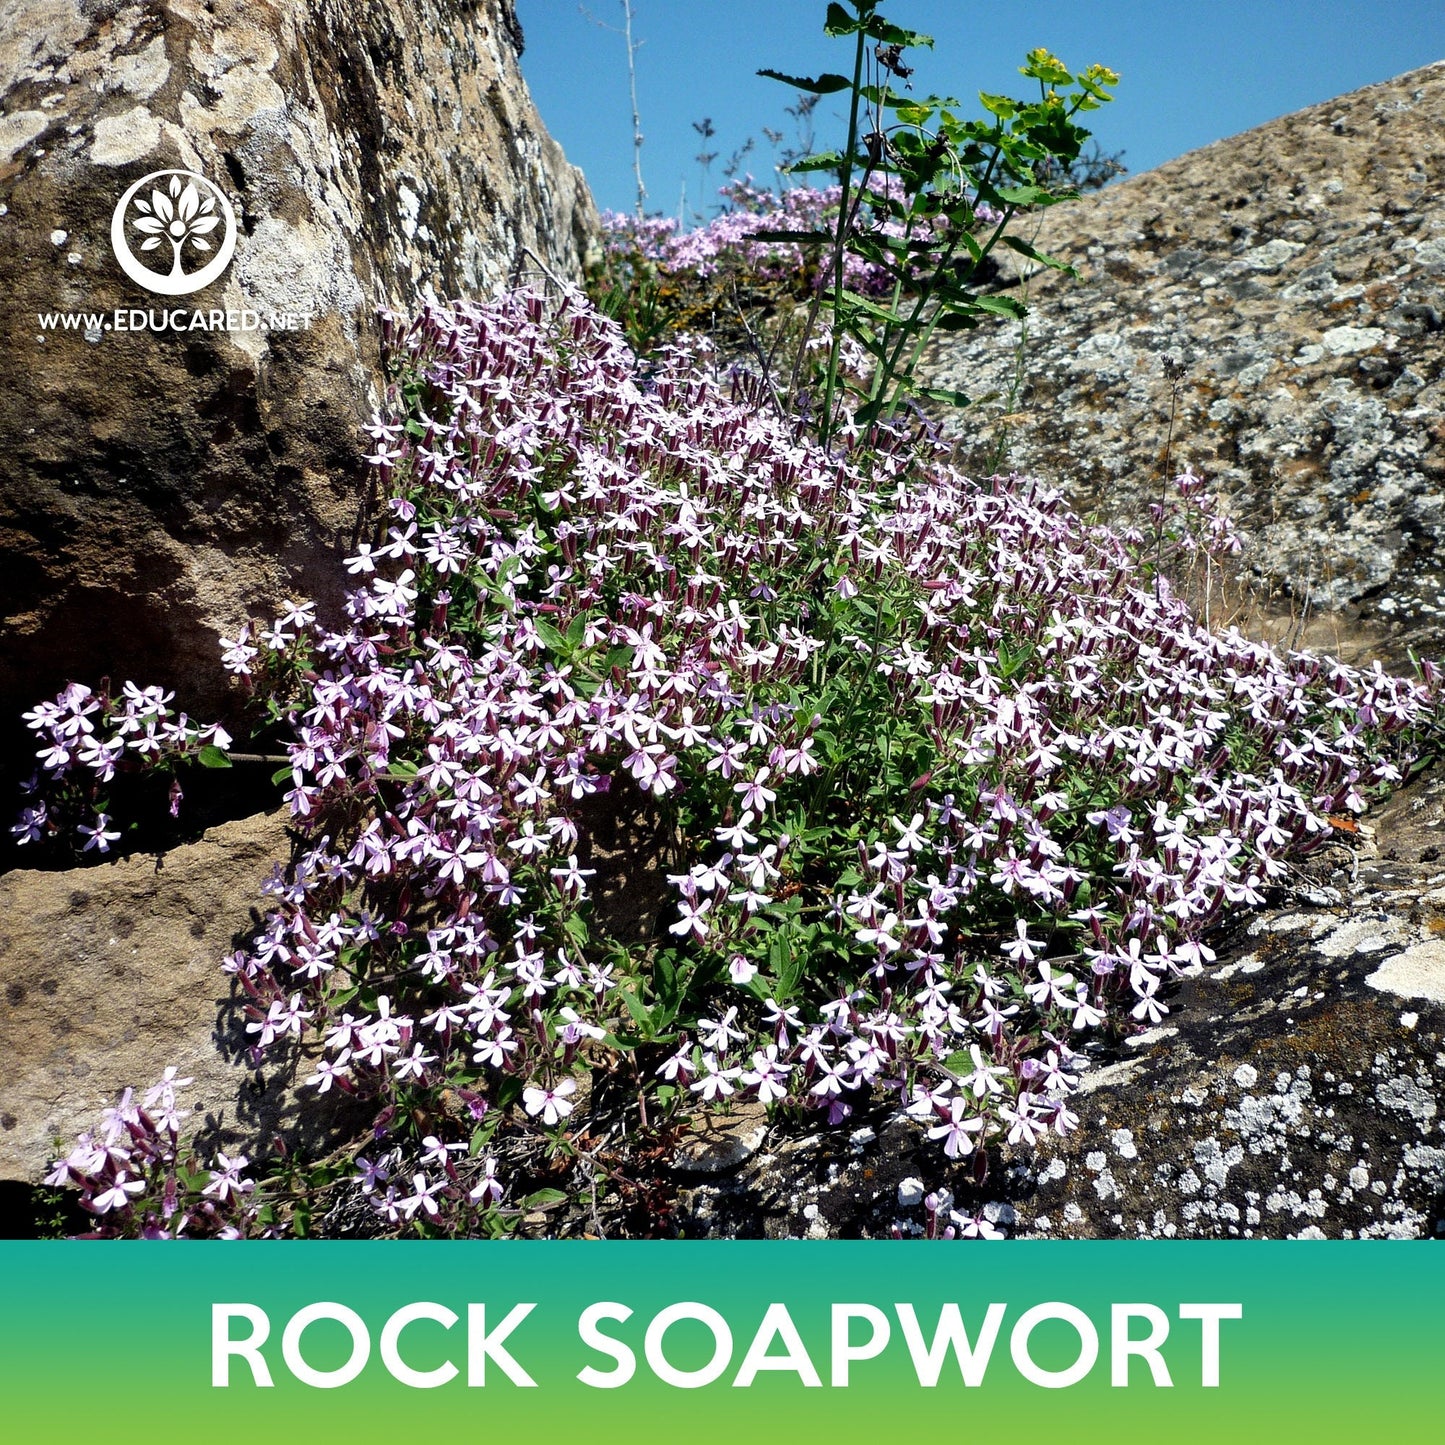 Rock Soapwort Seeds, Saponaria ocymoides